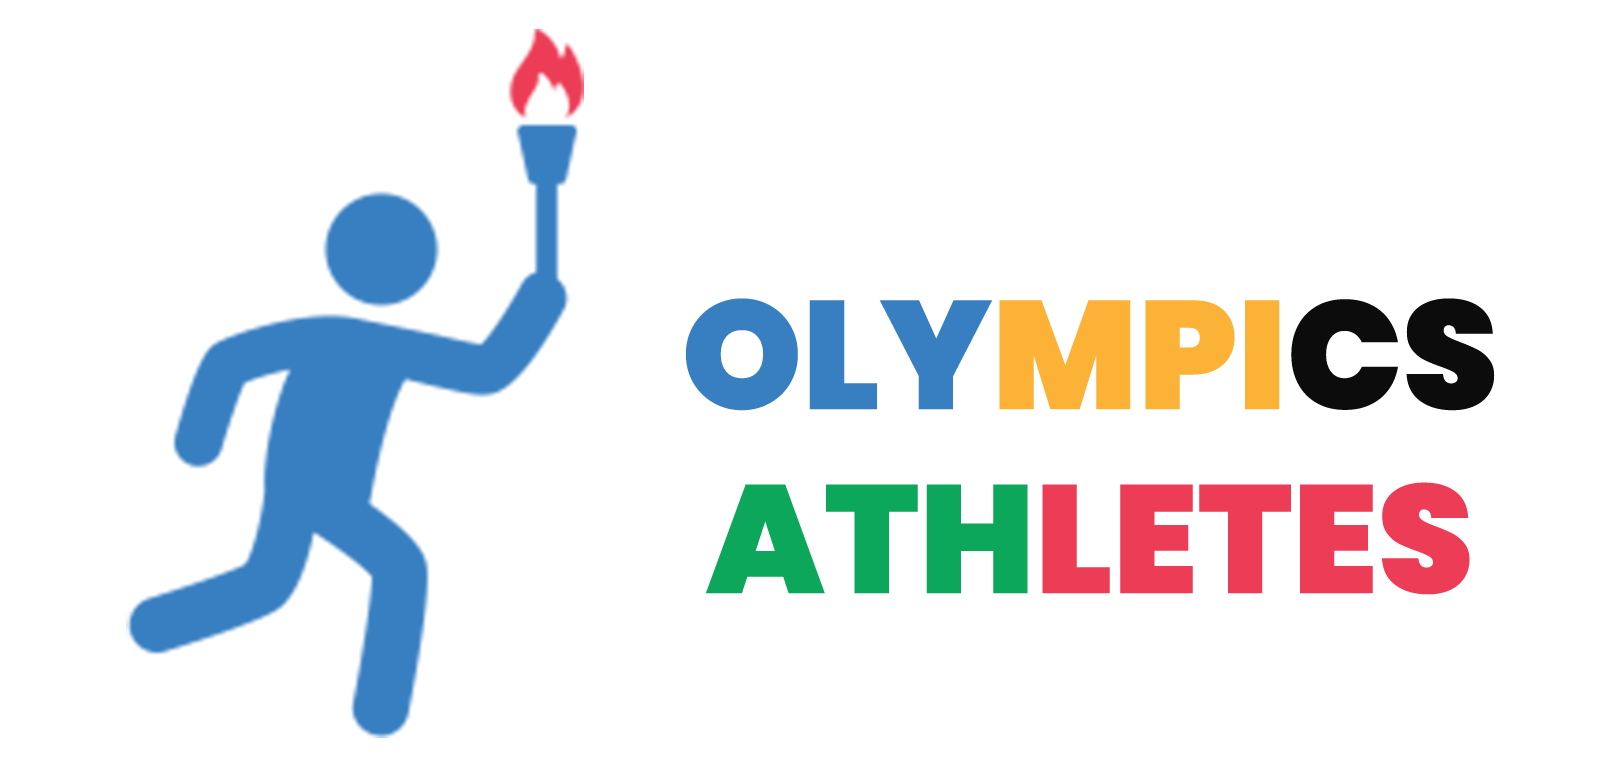 Olympics Athletes